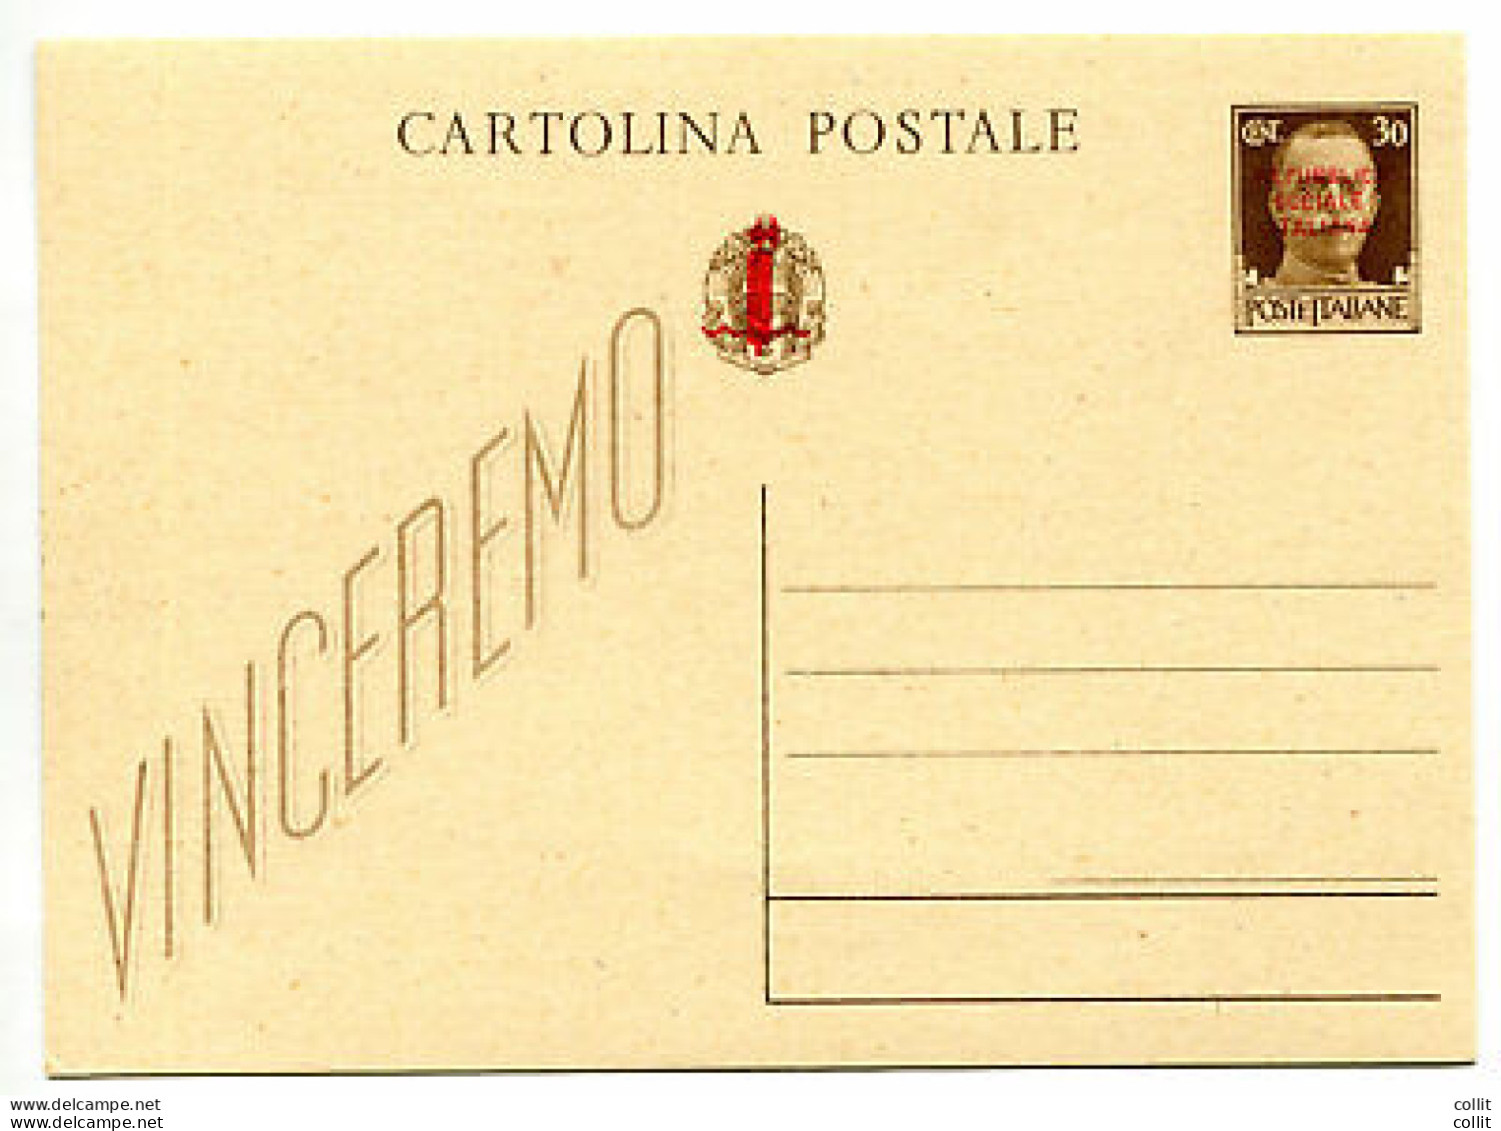 Cartolina Postale Repubblica Sociale Cent. 30 - Ungebraucht